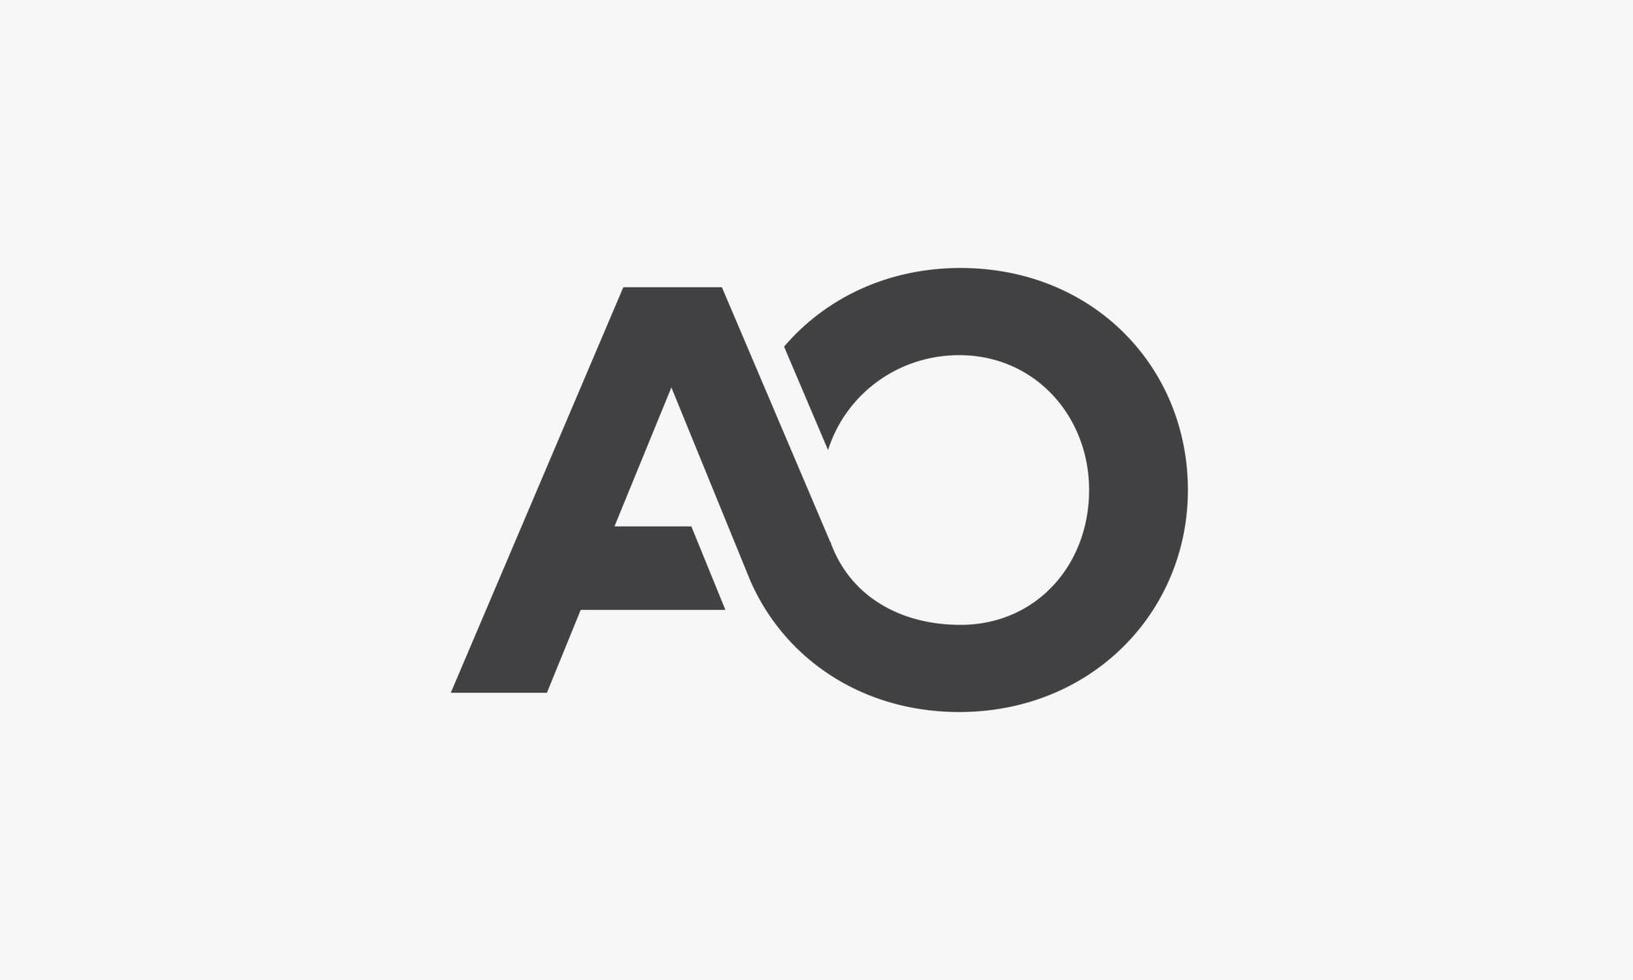 AO letter logo modern concept isolated on white background. vector